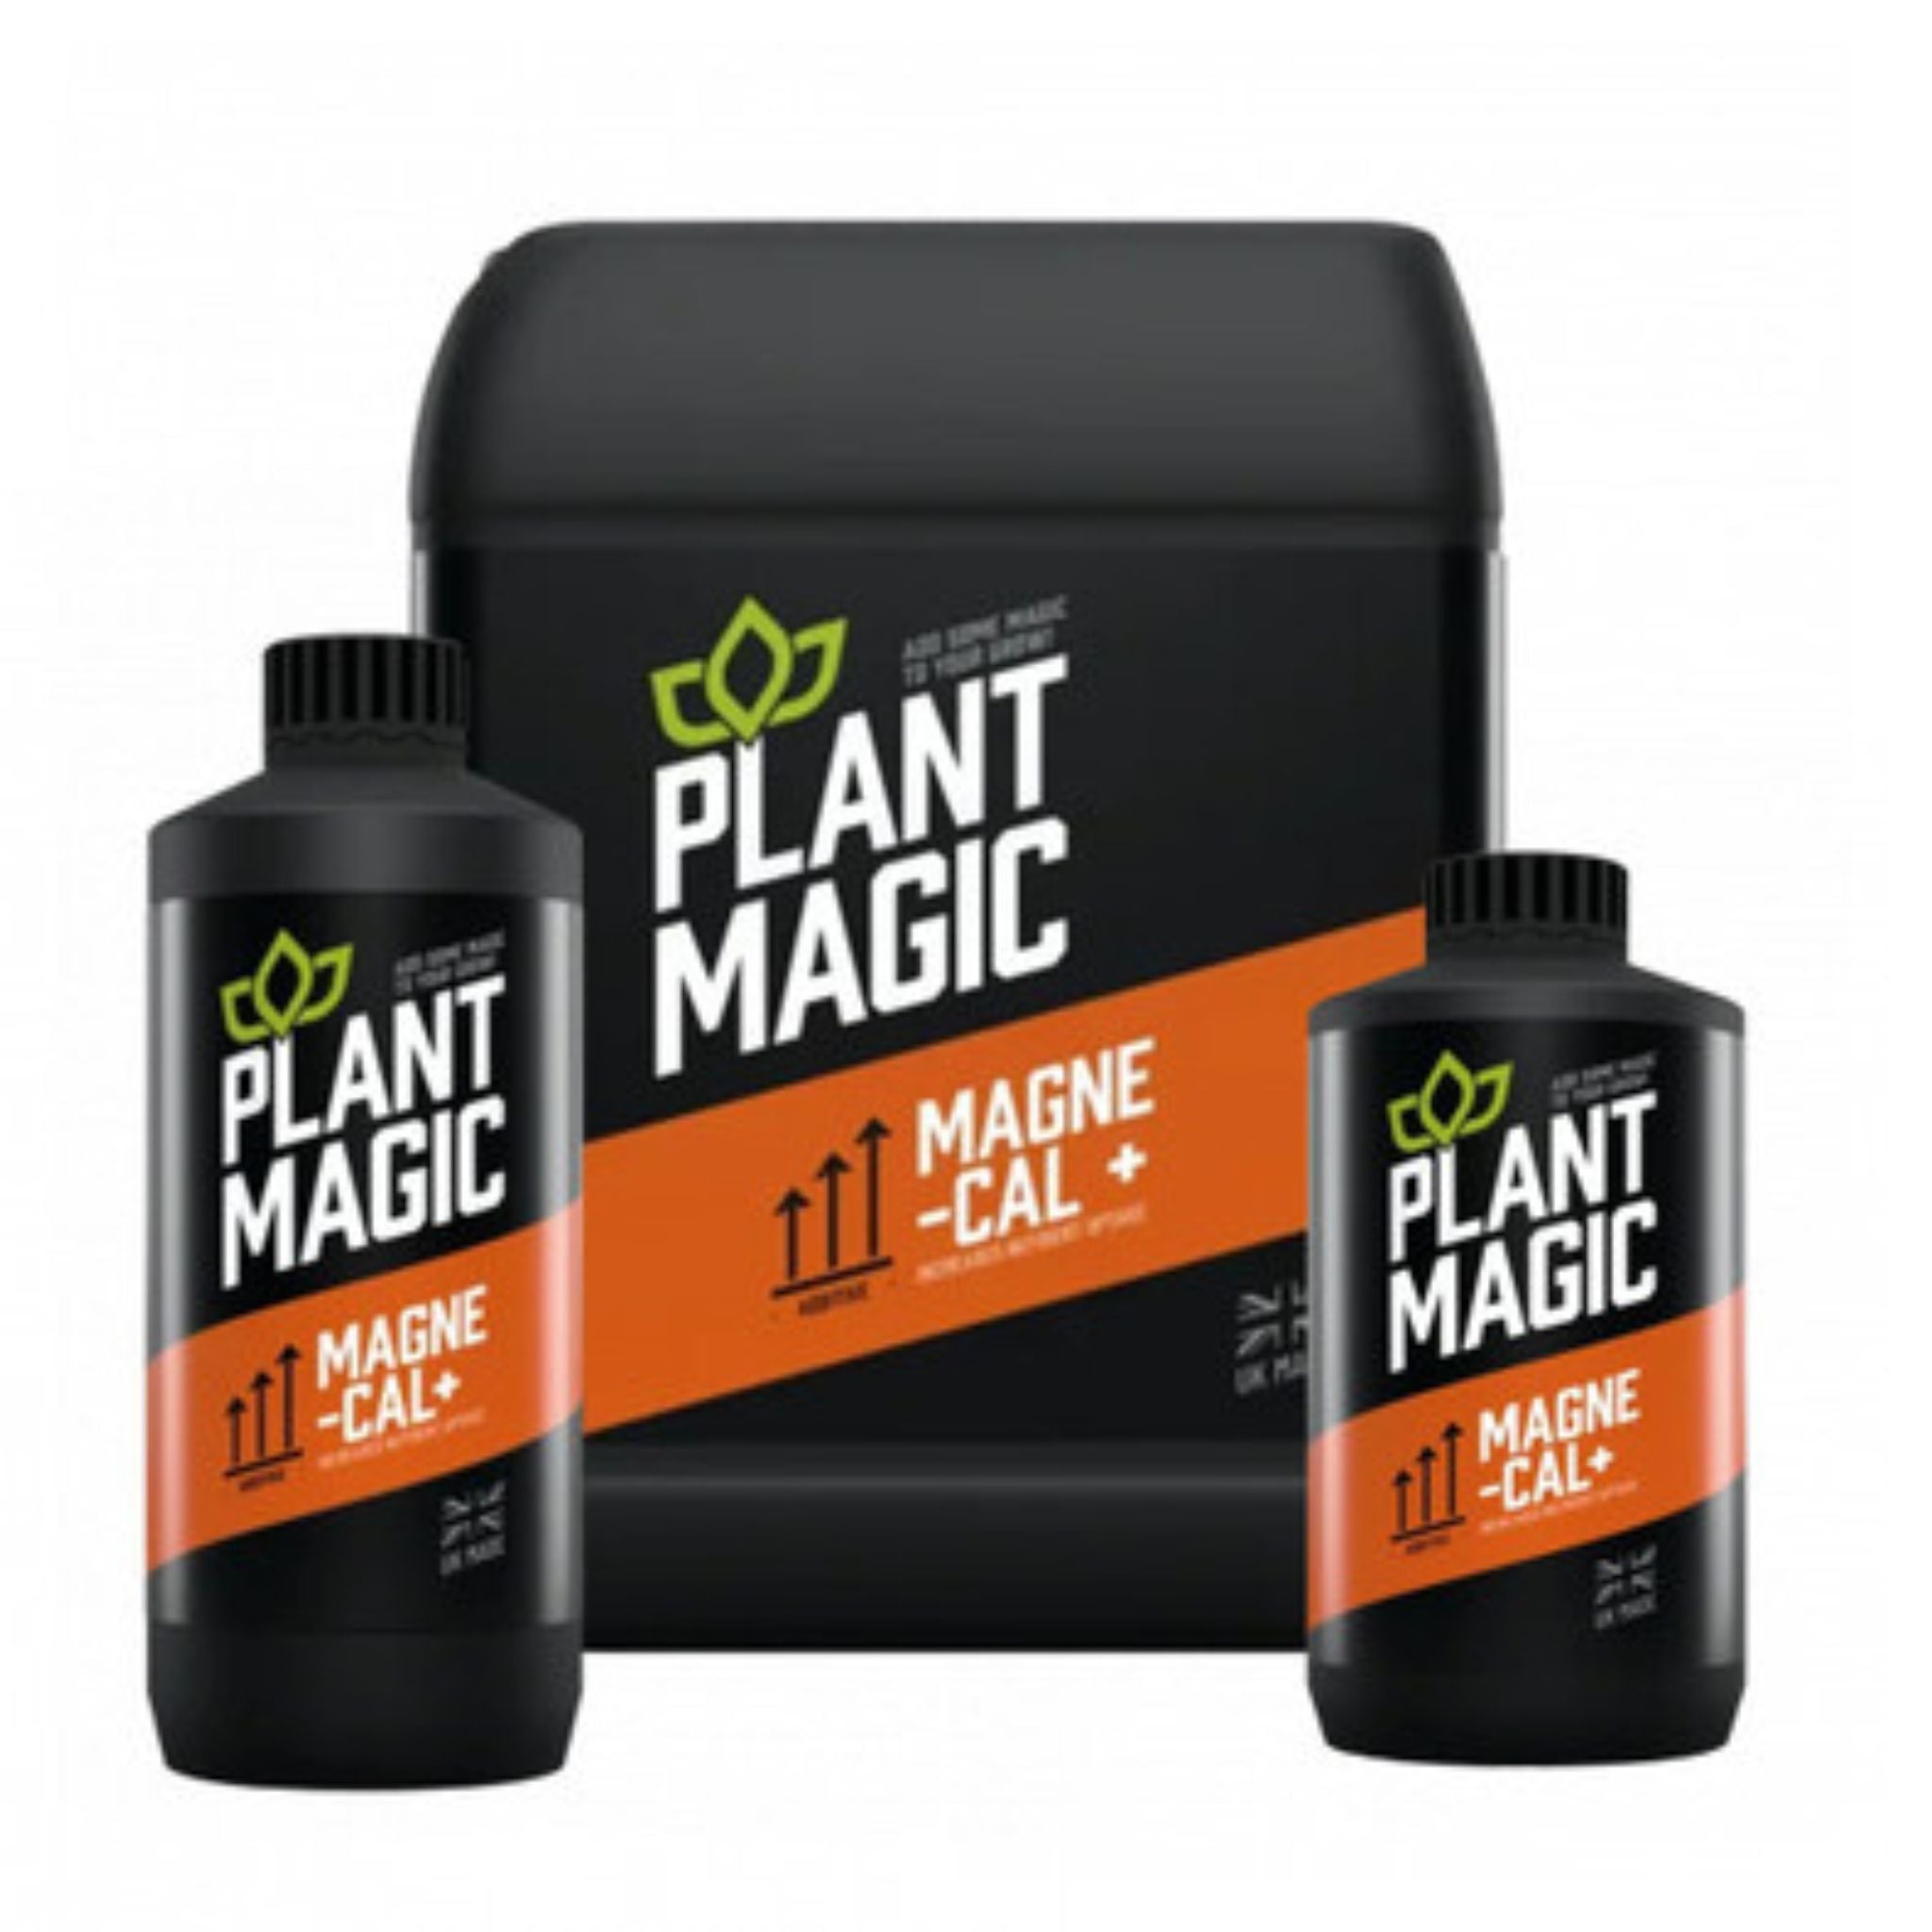 Plant Magic Magne Cal